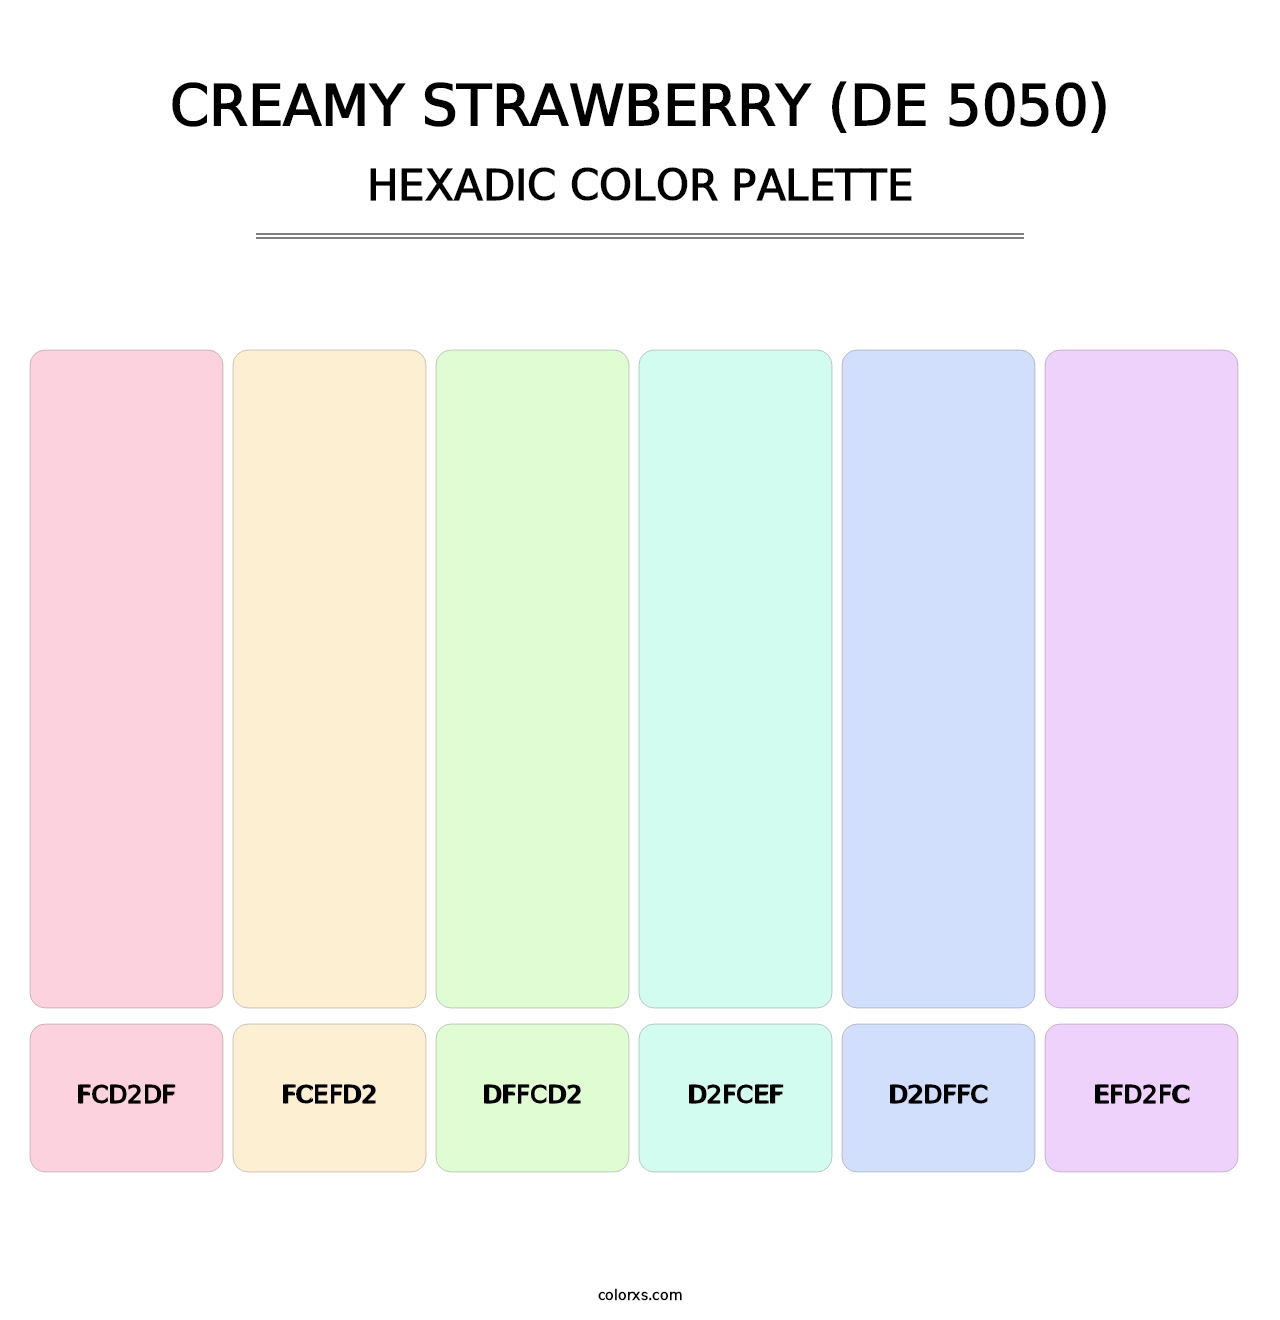 Creamy Strawberry (DE 5050) - Hexadic Color Palette